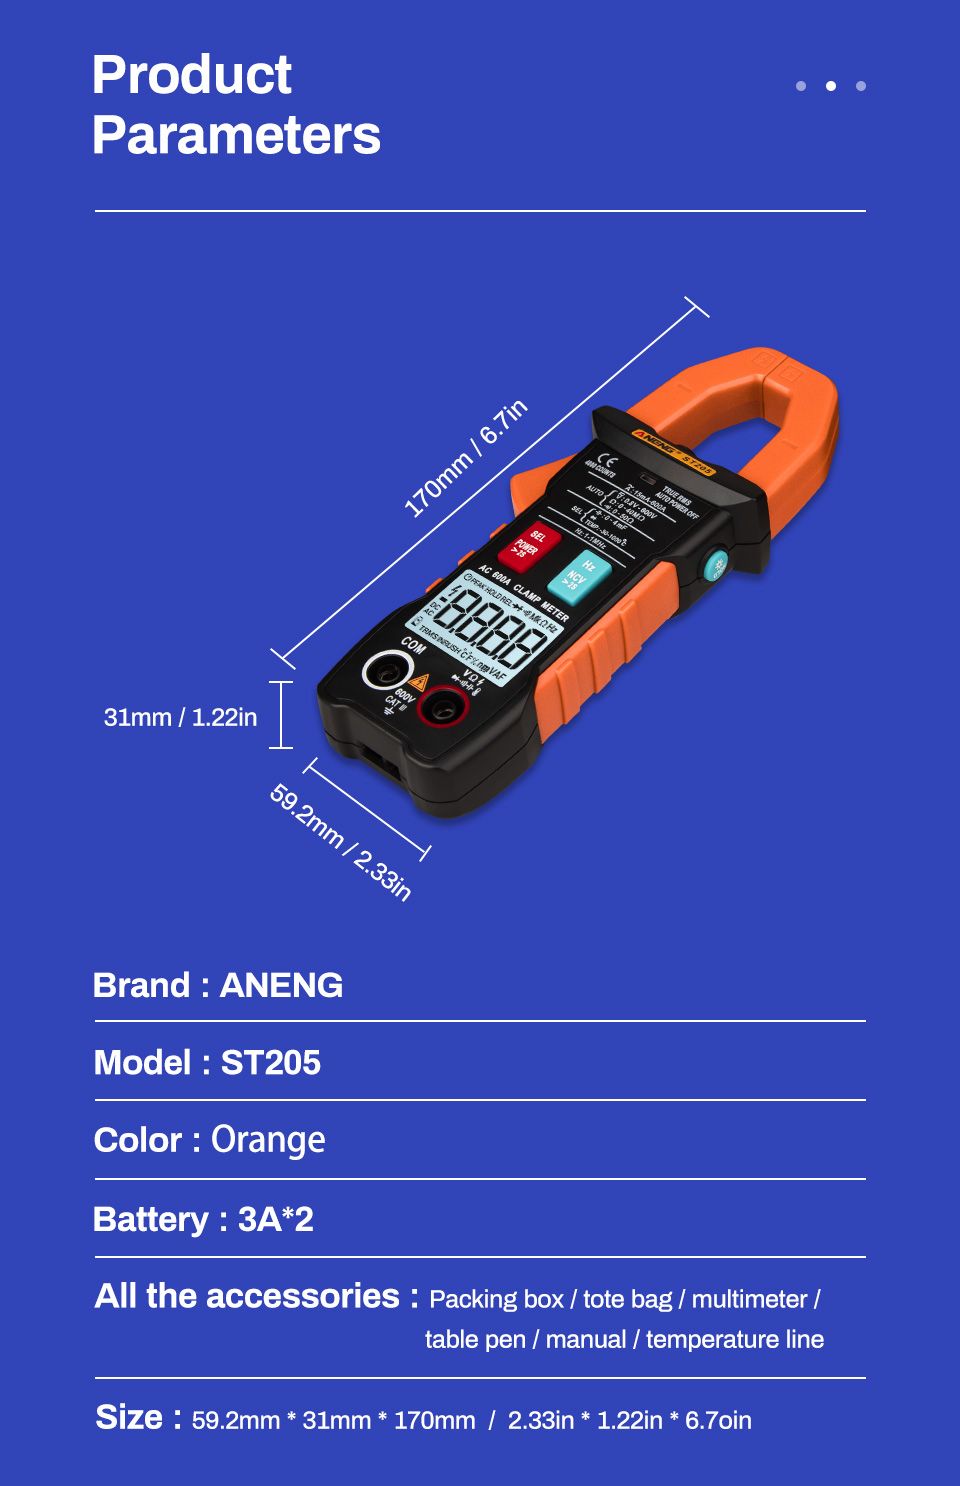 ANENG-ST205-Digital-Clamp-Meter-Analog-Multimeter-Current-Clamp-DCAC-Intelligent-AUTO-Range-Meter-wi-1514303